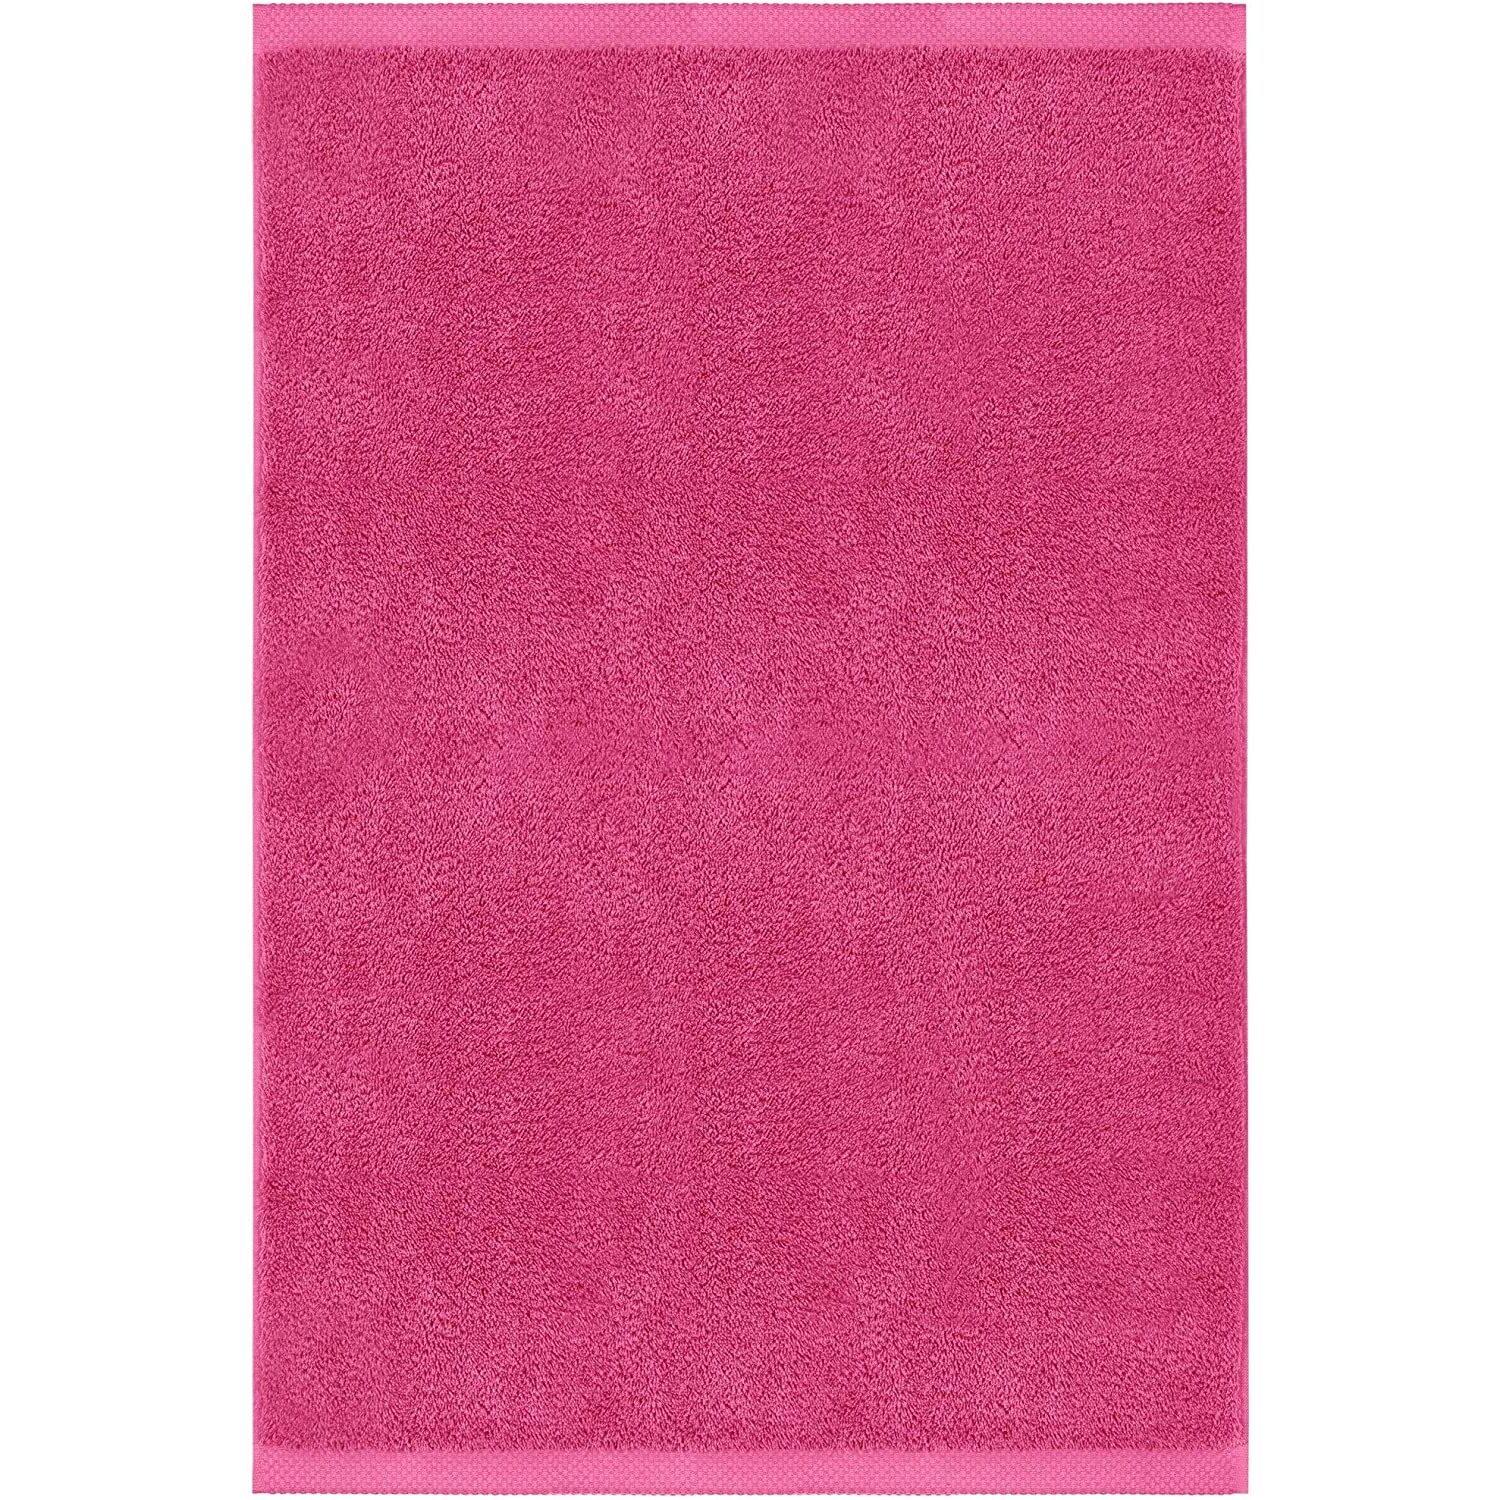 Handtücher :: Badetuch - Baumwolle, 100% 100x150 Pure Strandtuch Badelaken Rosa aus cm, Frottee Pflaume